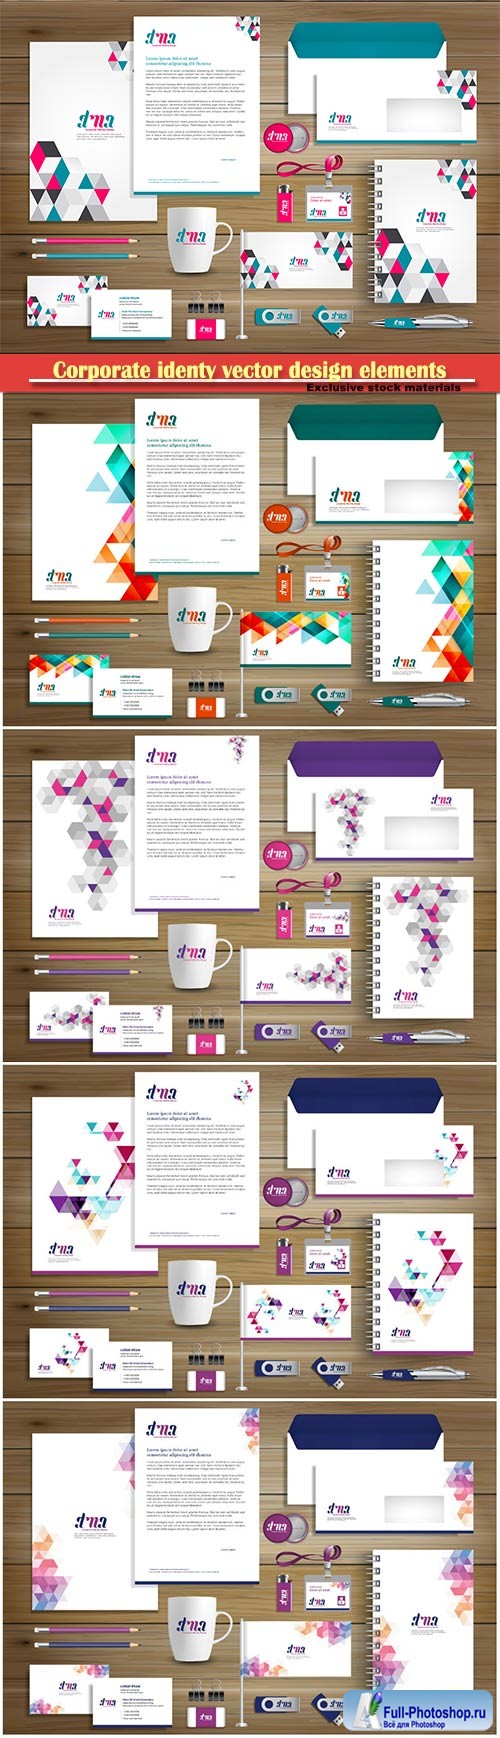 Corporate identy vector design elements illustration template